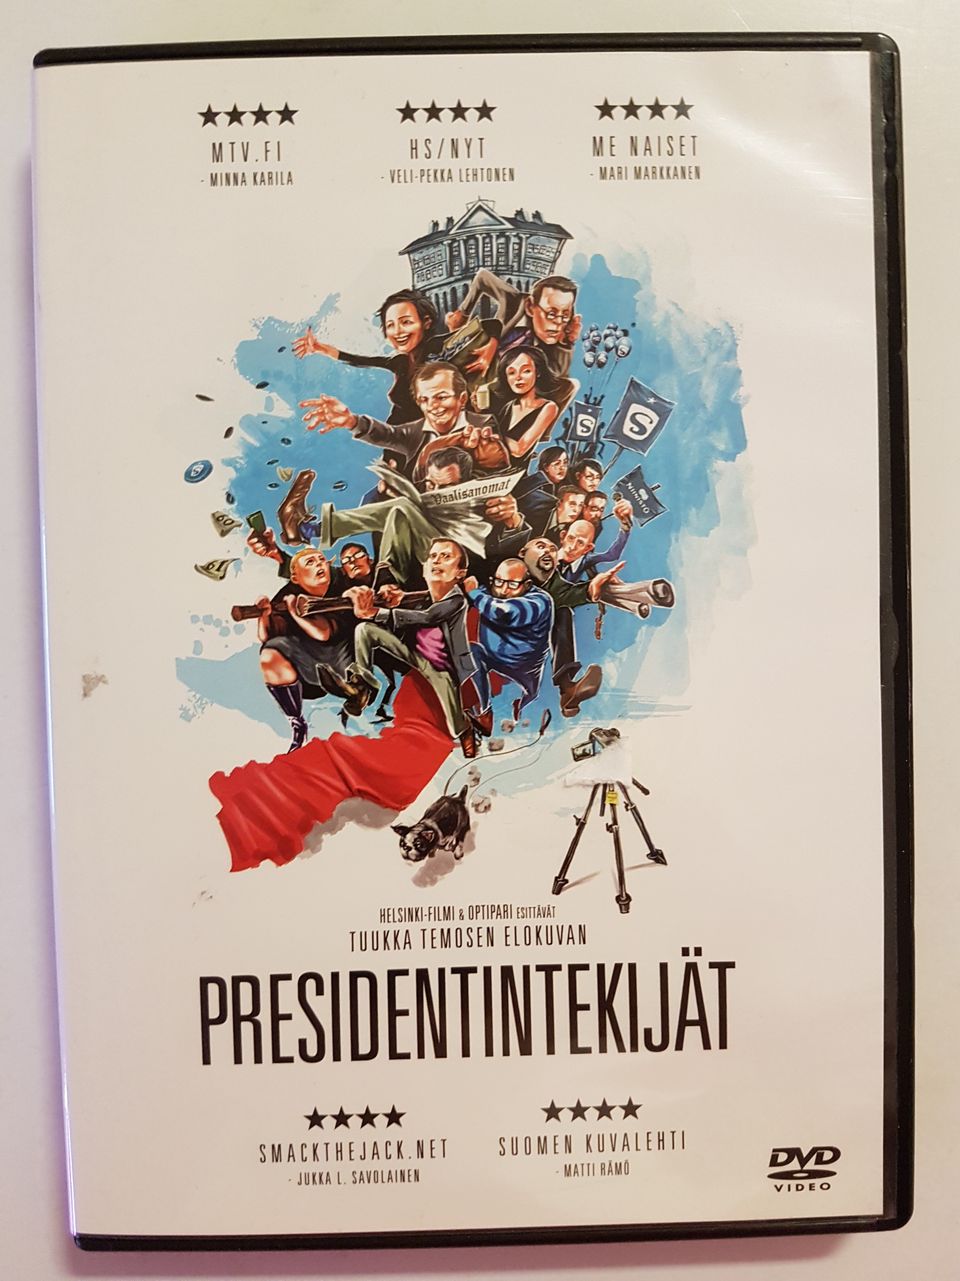 Presidentintekijät, DVD